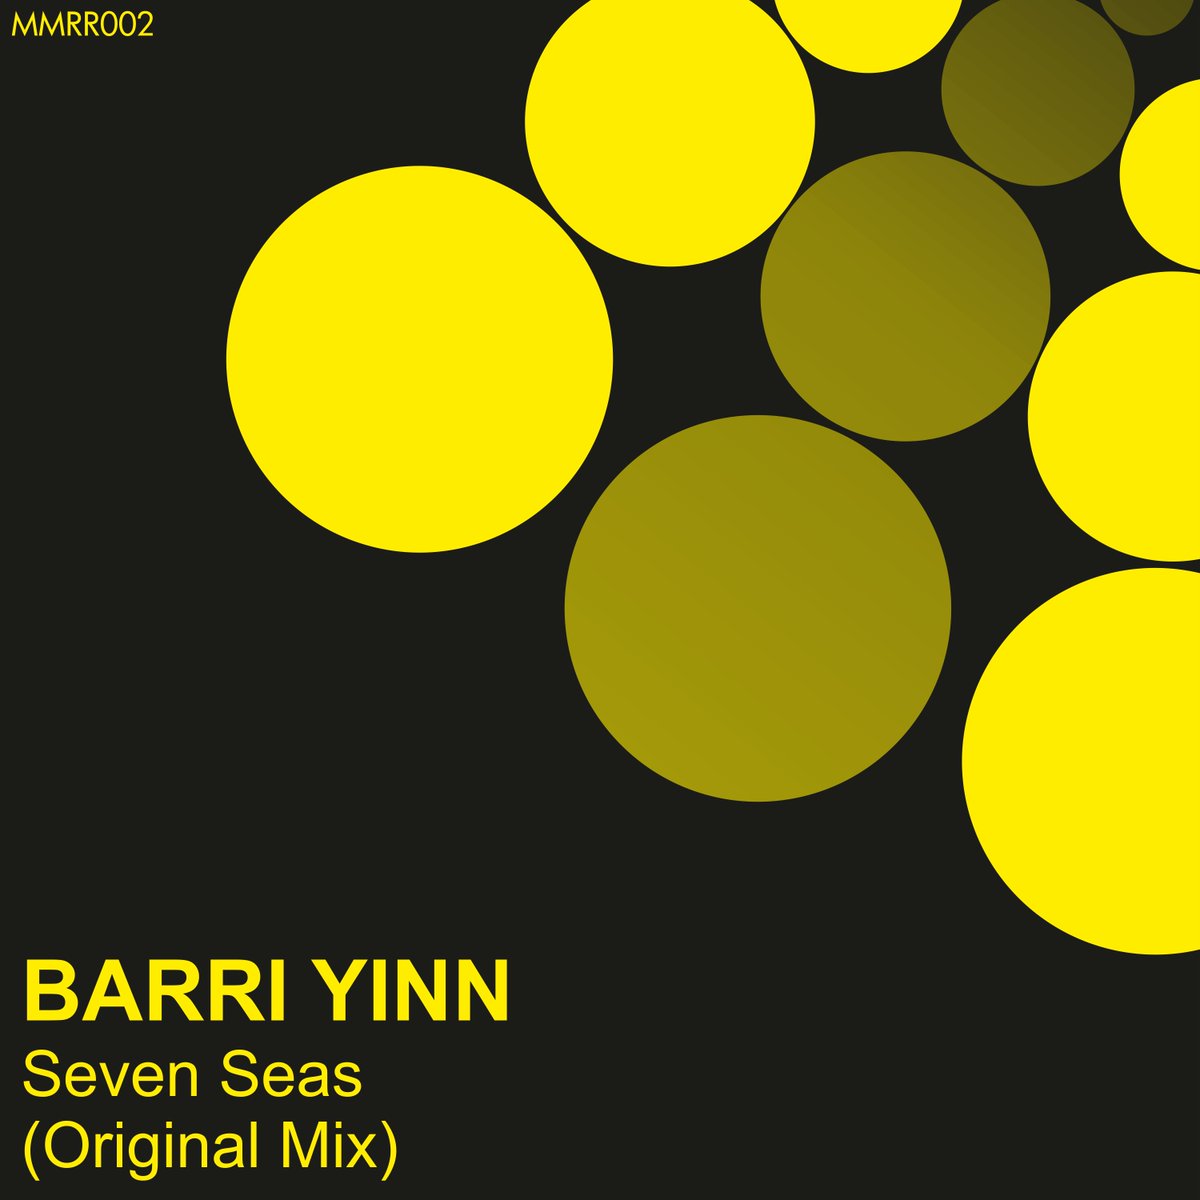 #barriyinn #sevenseas #digitalcover #cuartaraartdesign #misumisurecords #label #records